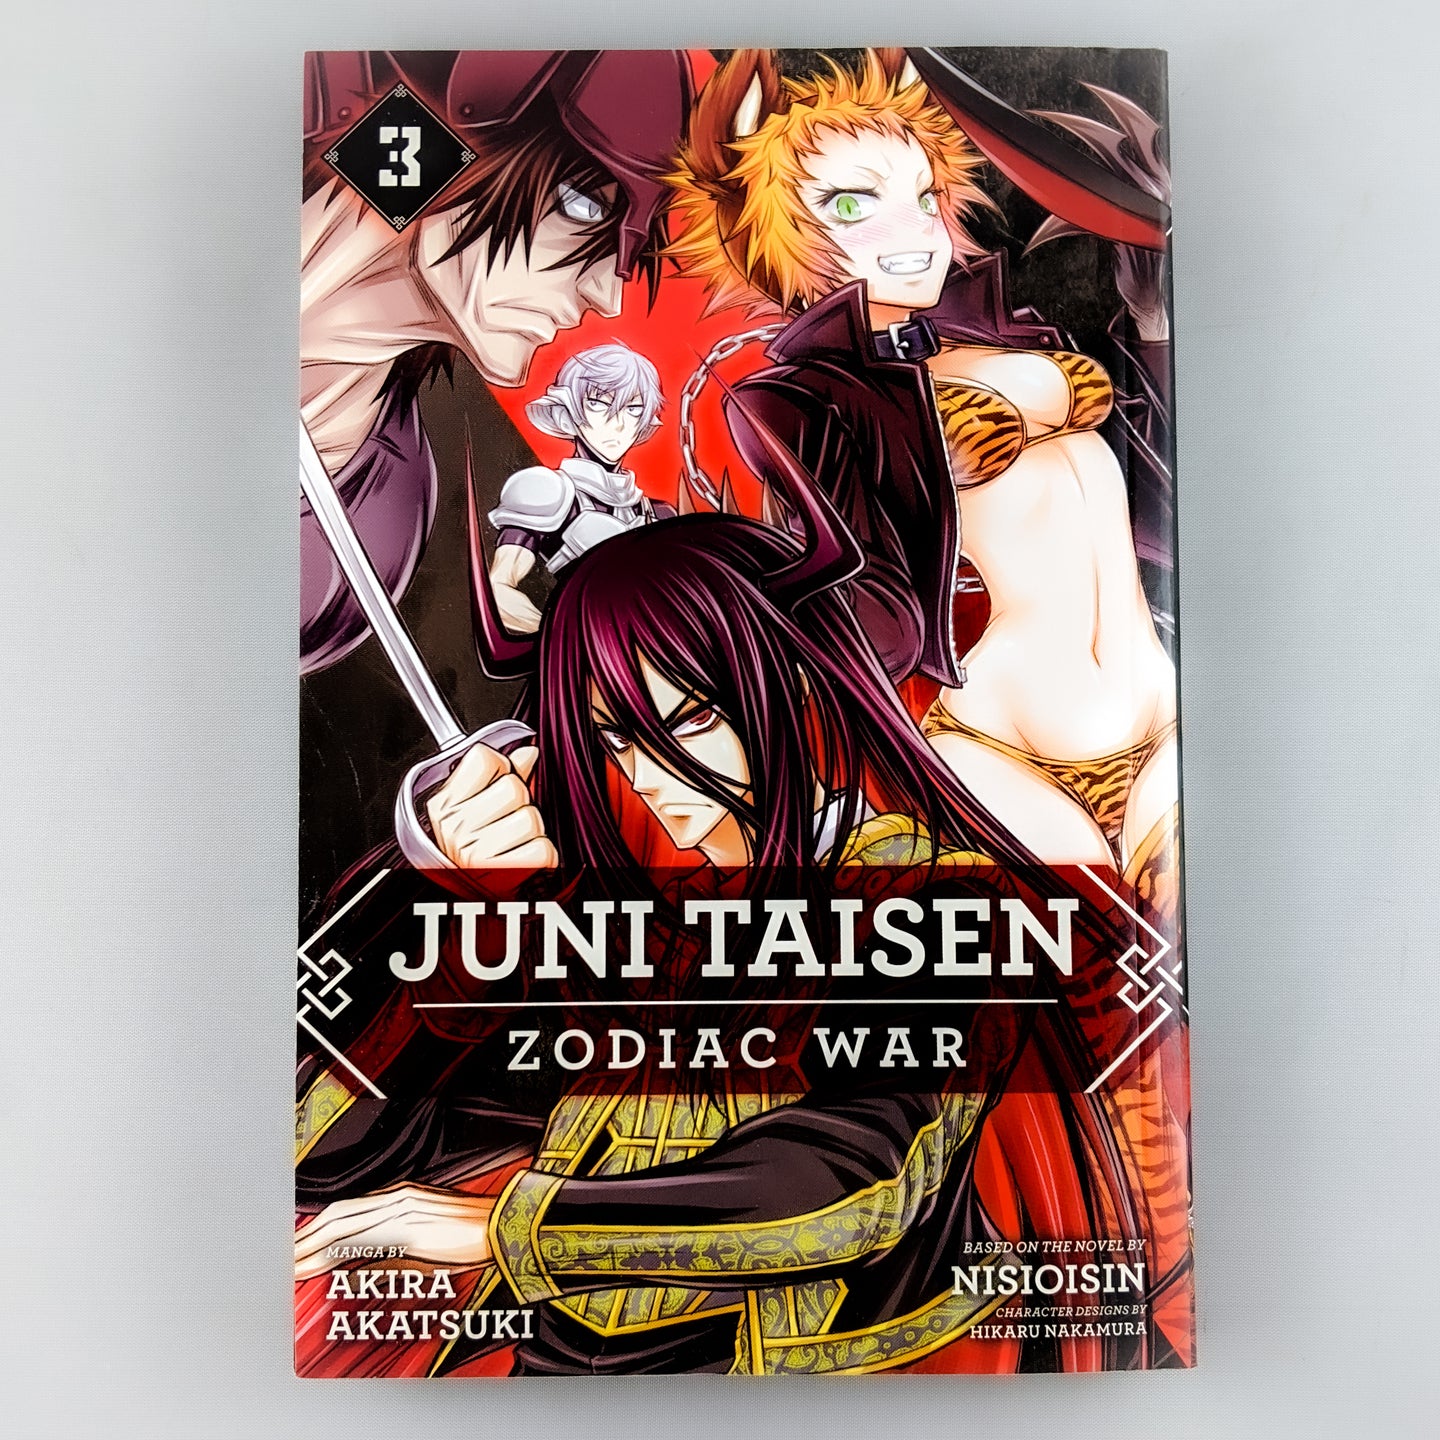 Juni Taisen Zodiac War Manga volume 3. Manga by Akira Akatsuki and Nisioisin